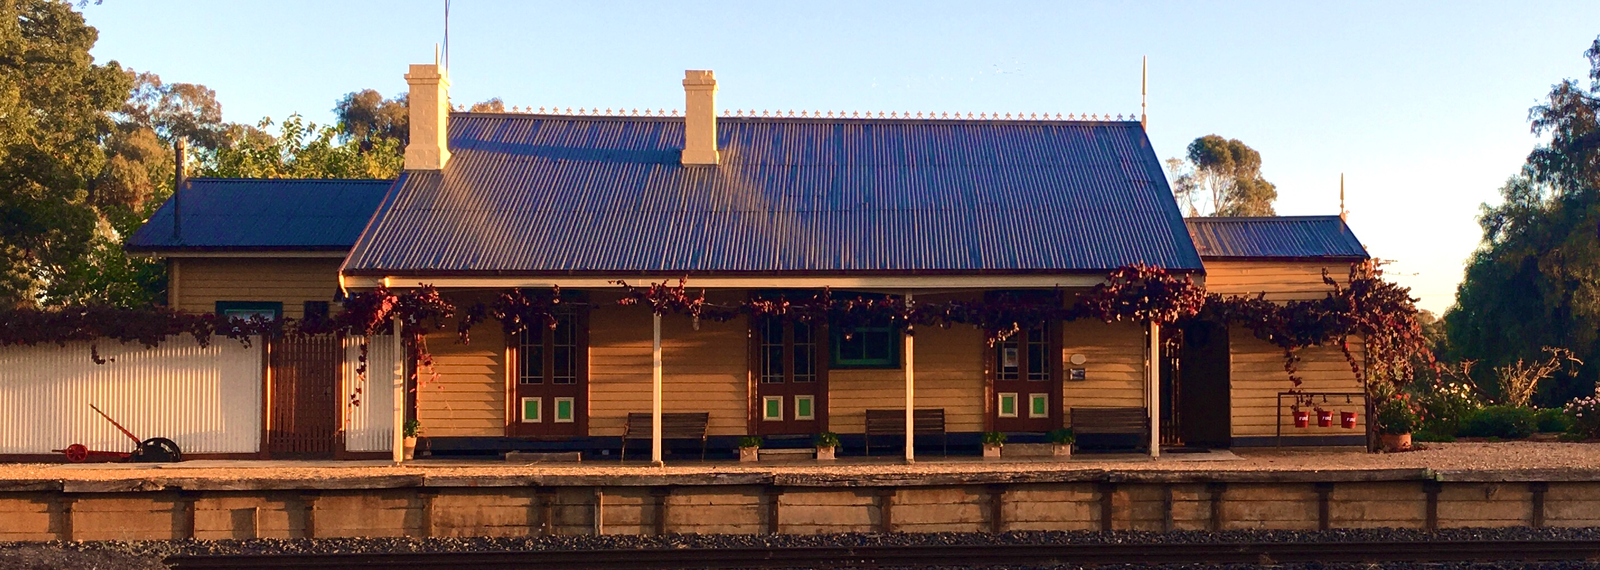 Bealiba Railway Station